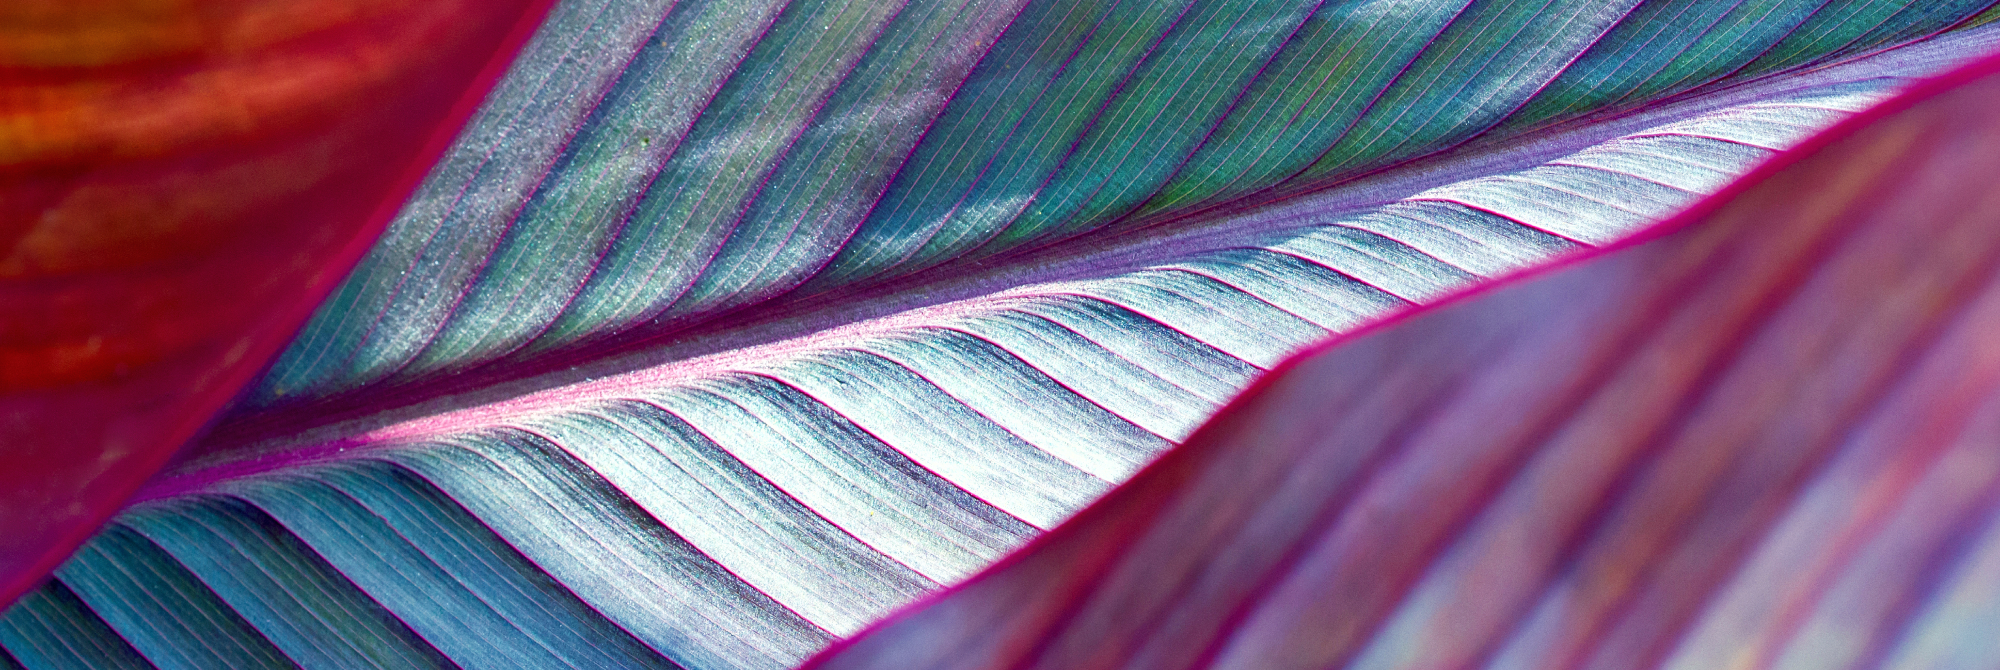 close up of purple leaf